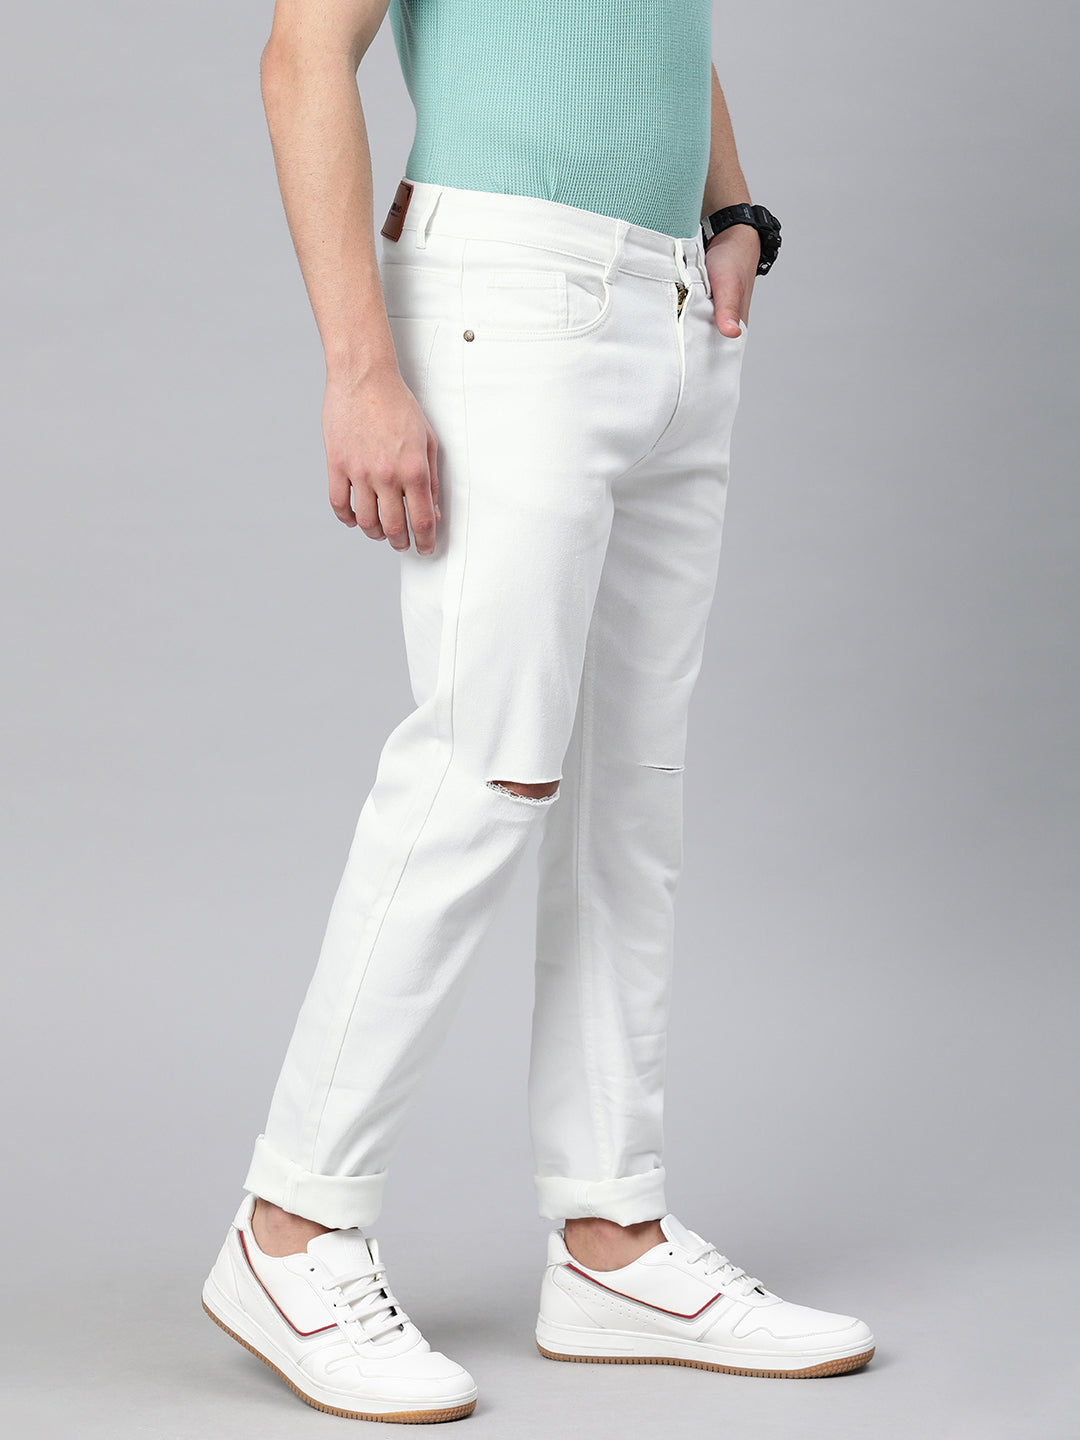 Men's White Slim Fit Knee Slit Distressed Jeans Stretch